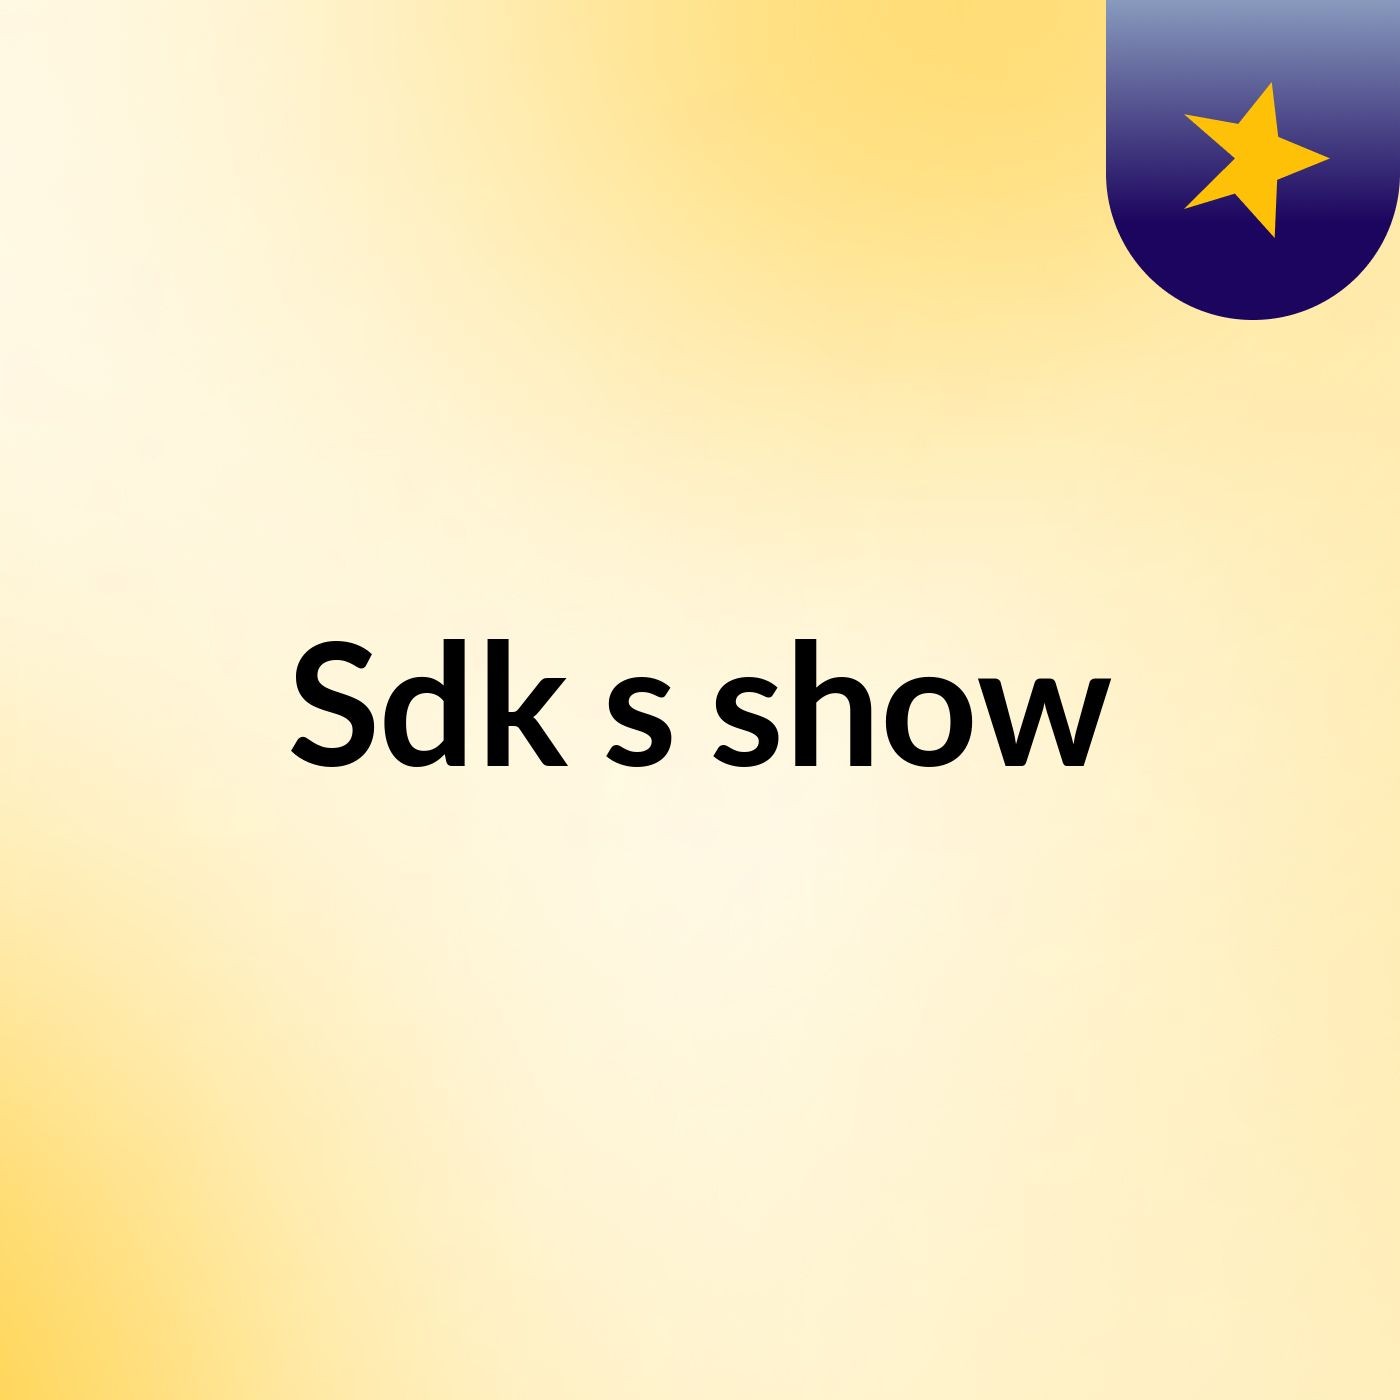 Sdk's show